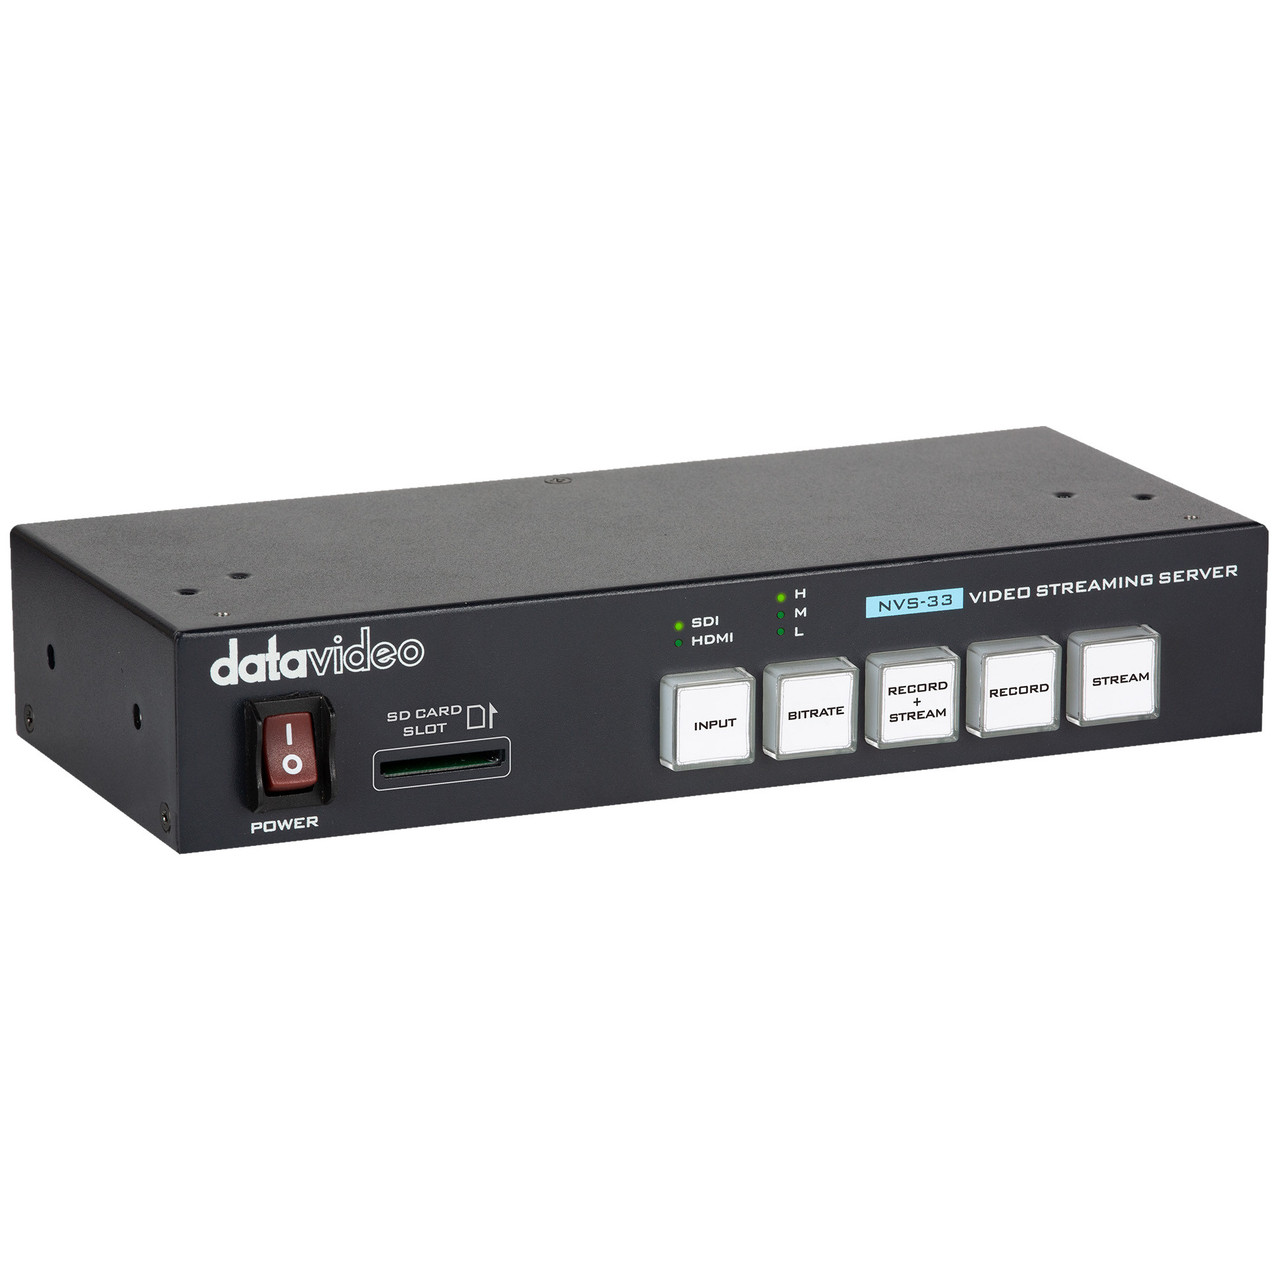 Datavideo NVS-33 Video Streaming Encoder/Recorder